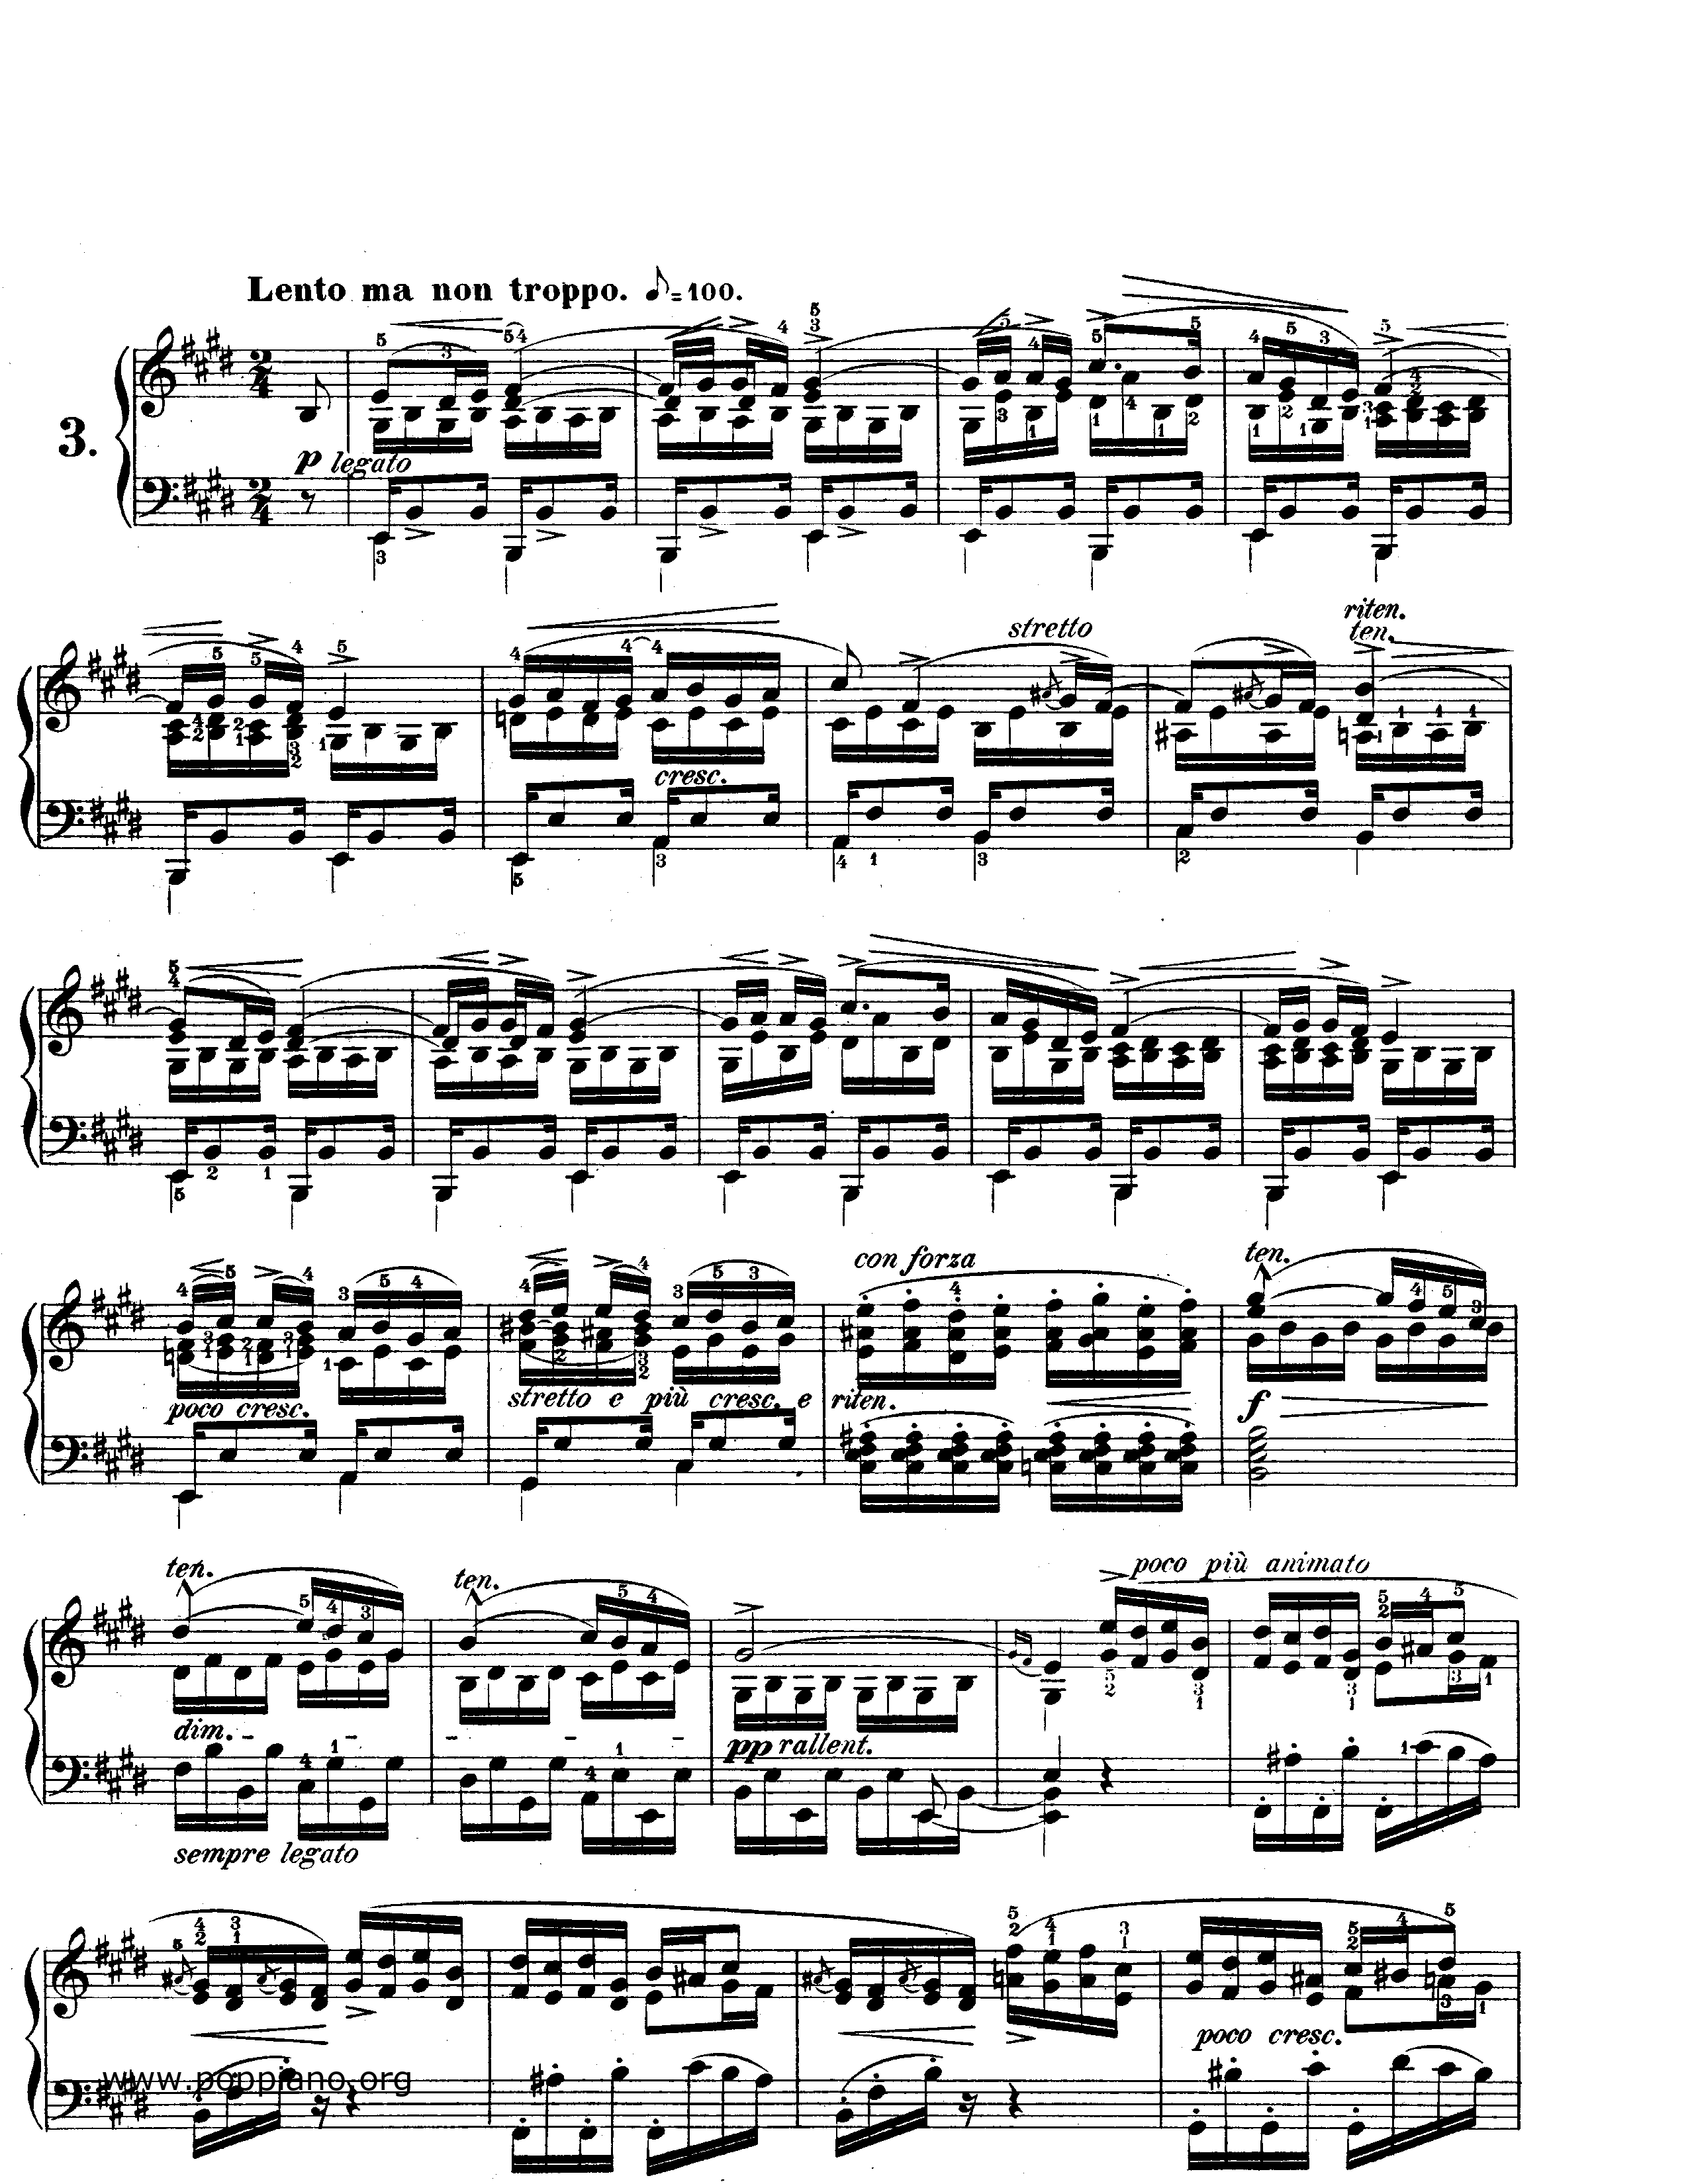 12 Etudes, Op. 10: No. 3 In E Tristesse Score